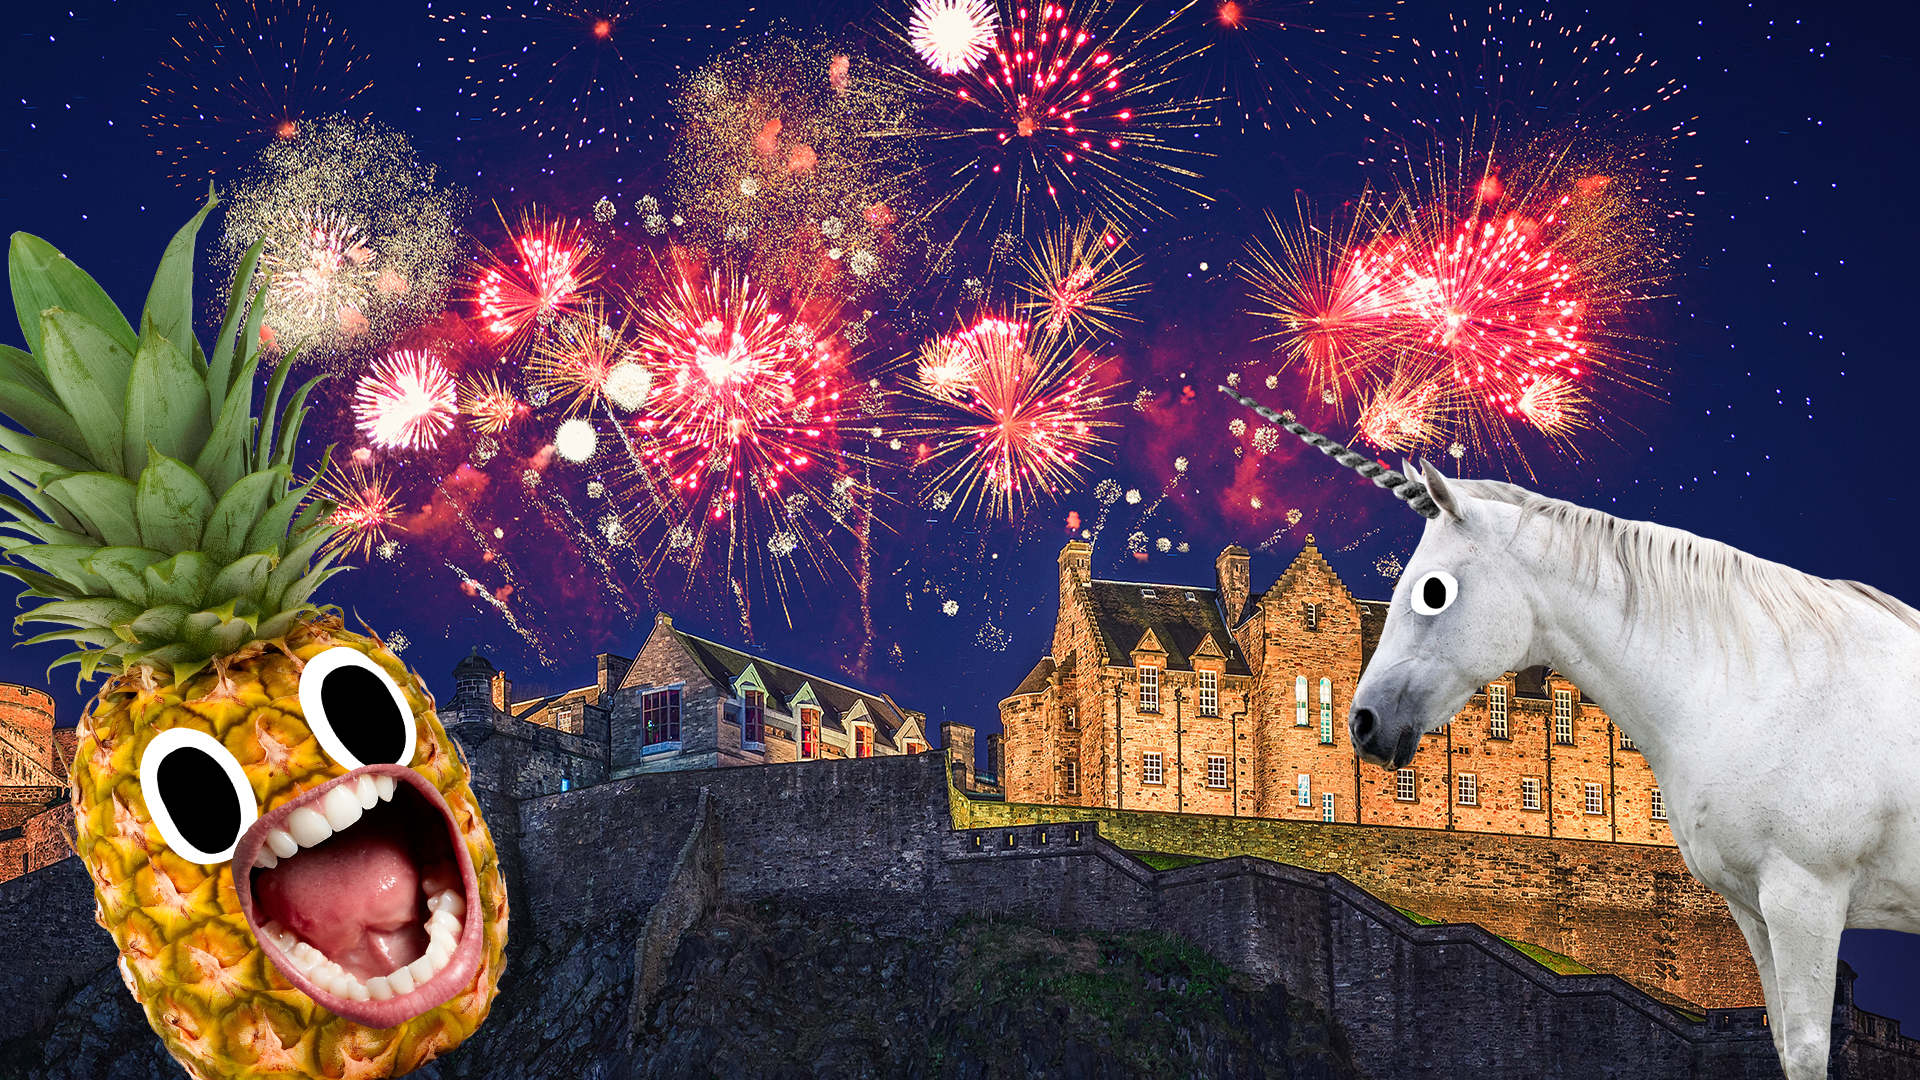 Edinburgh castle, fireworks, pineapple and unicorn